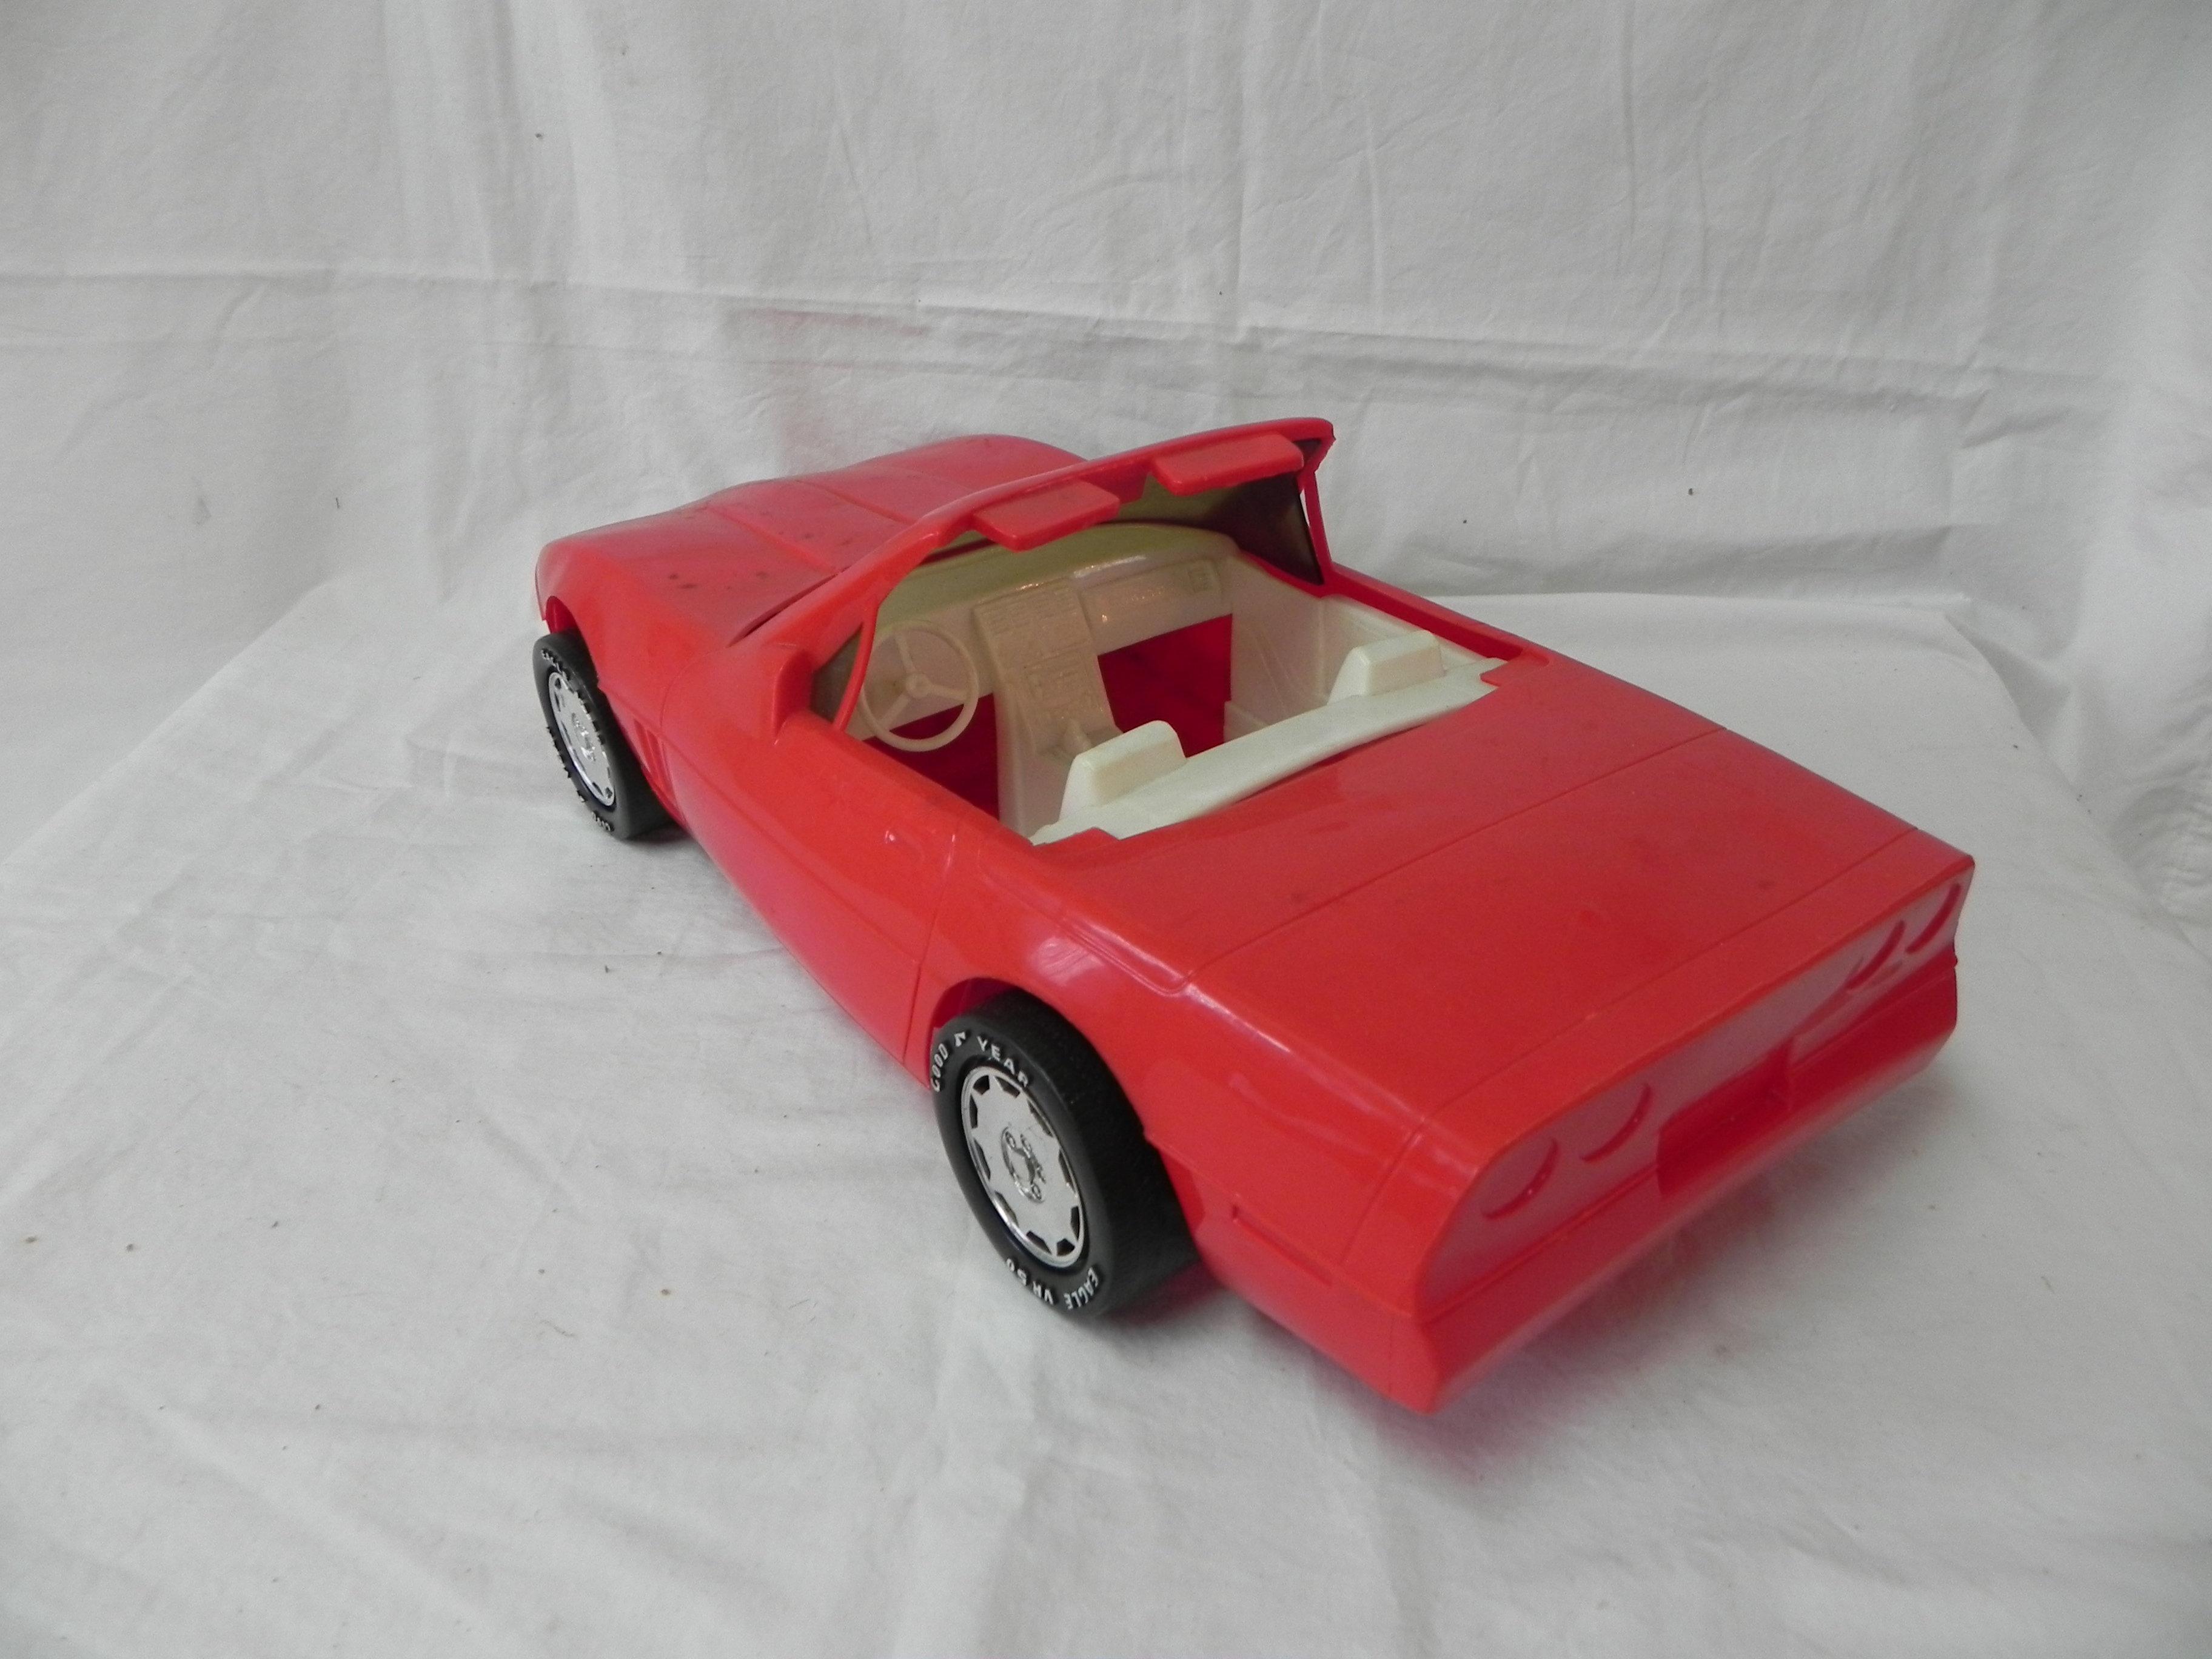 American Plastic Toys “Corvette” #904